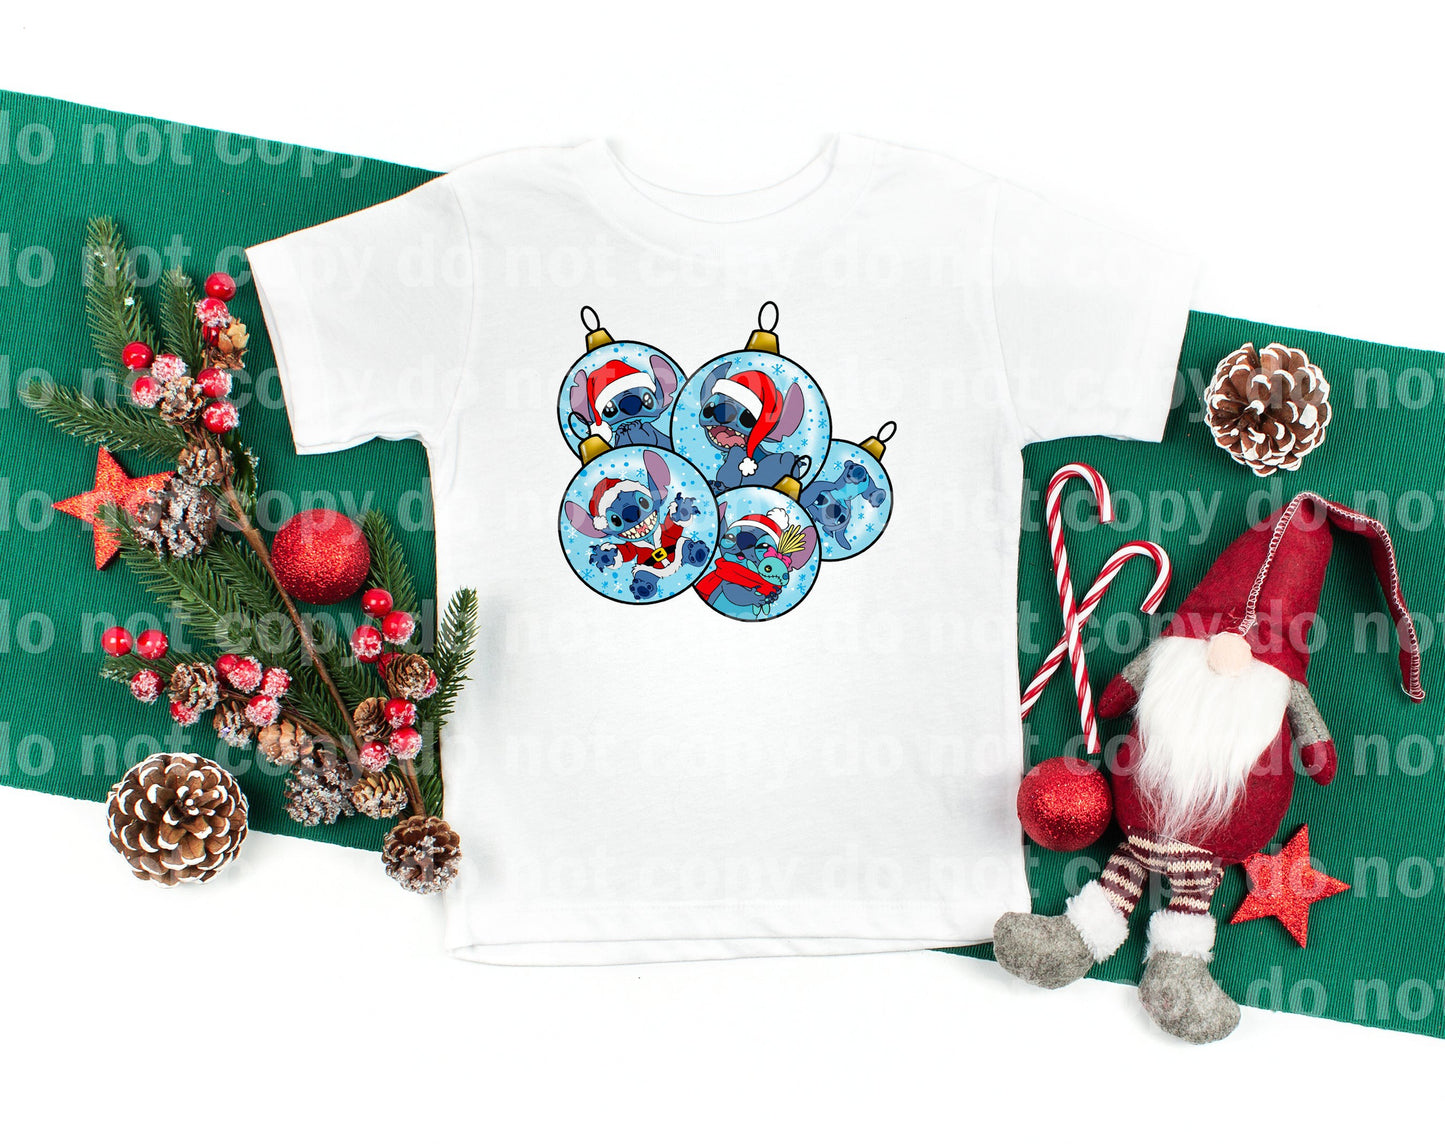 Blue Alien Christmas Ornament Balls with Optional Sleeve Design Dream Print or Sublimation Print